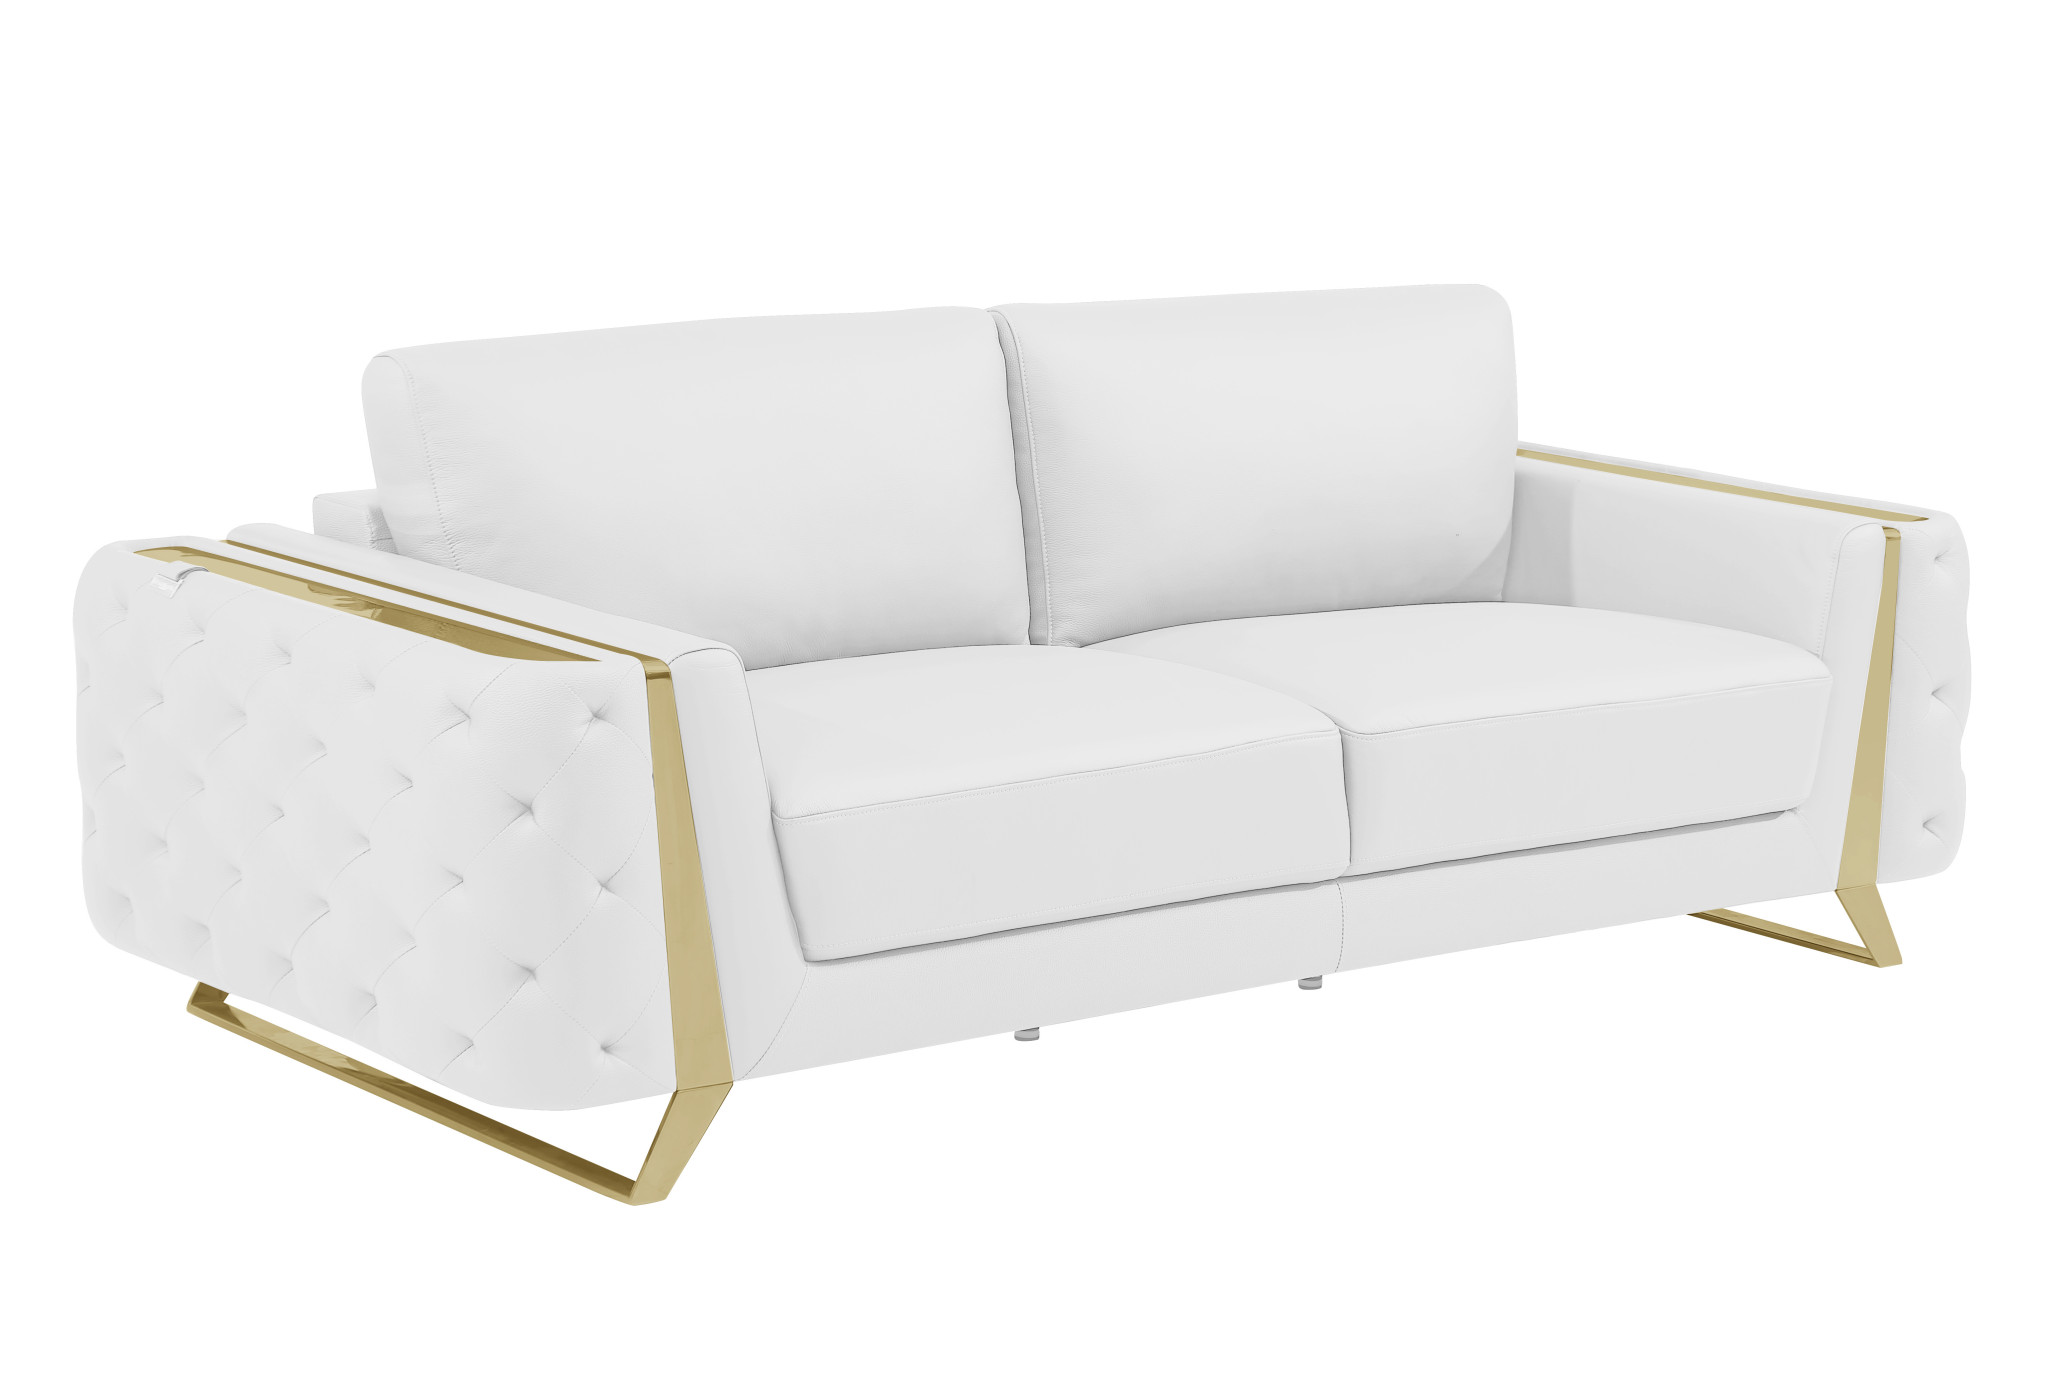 90" White And Gold Italian Leather Sofa-491053-1